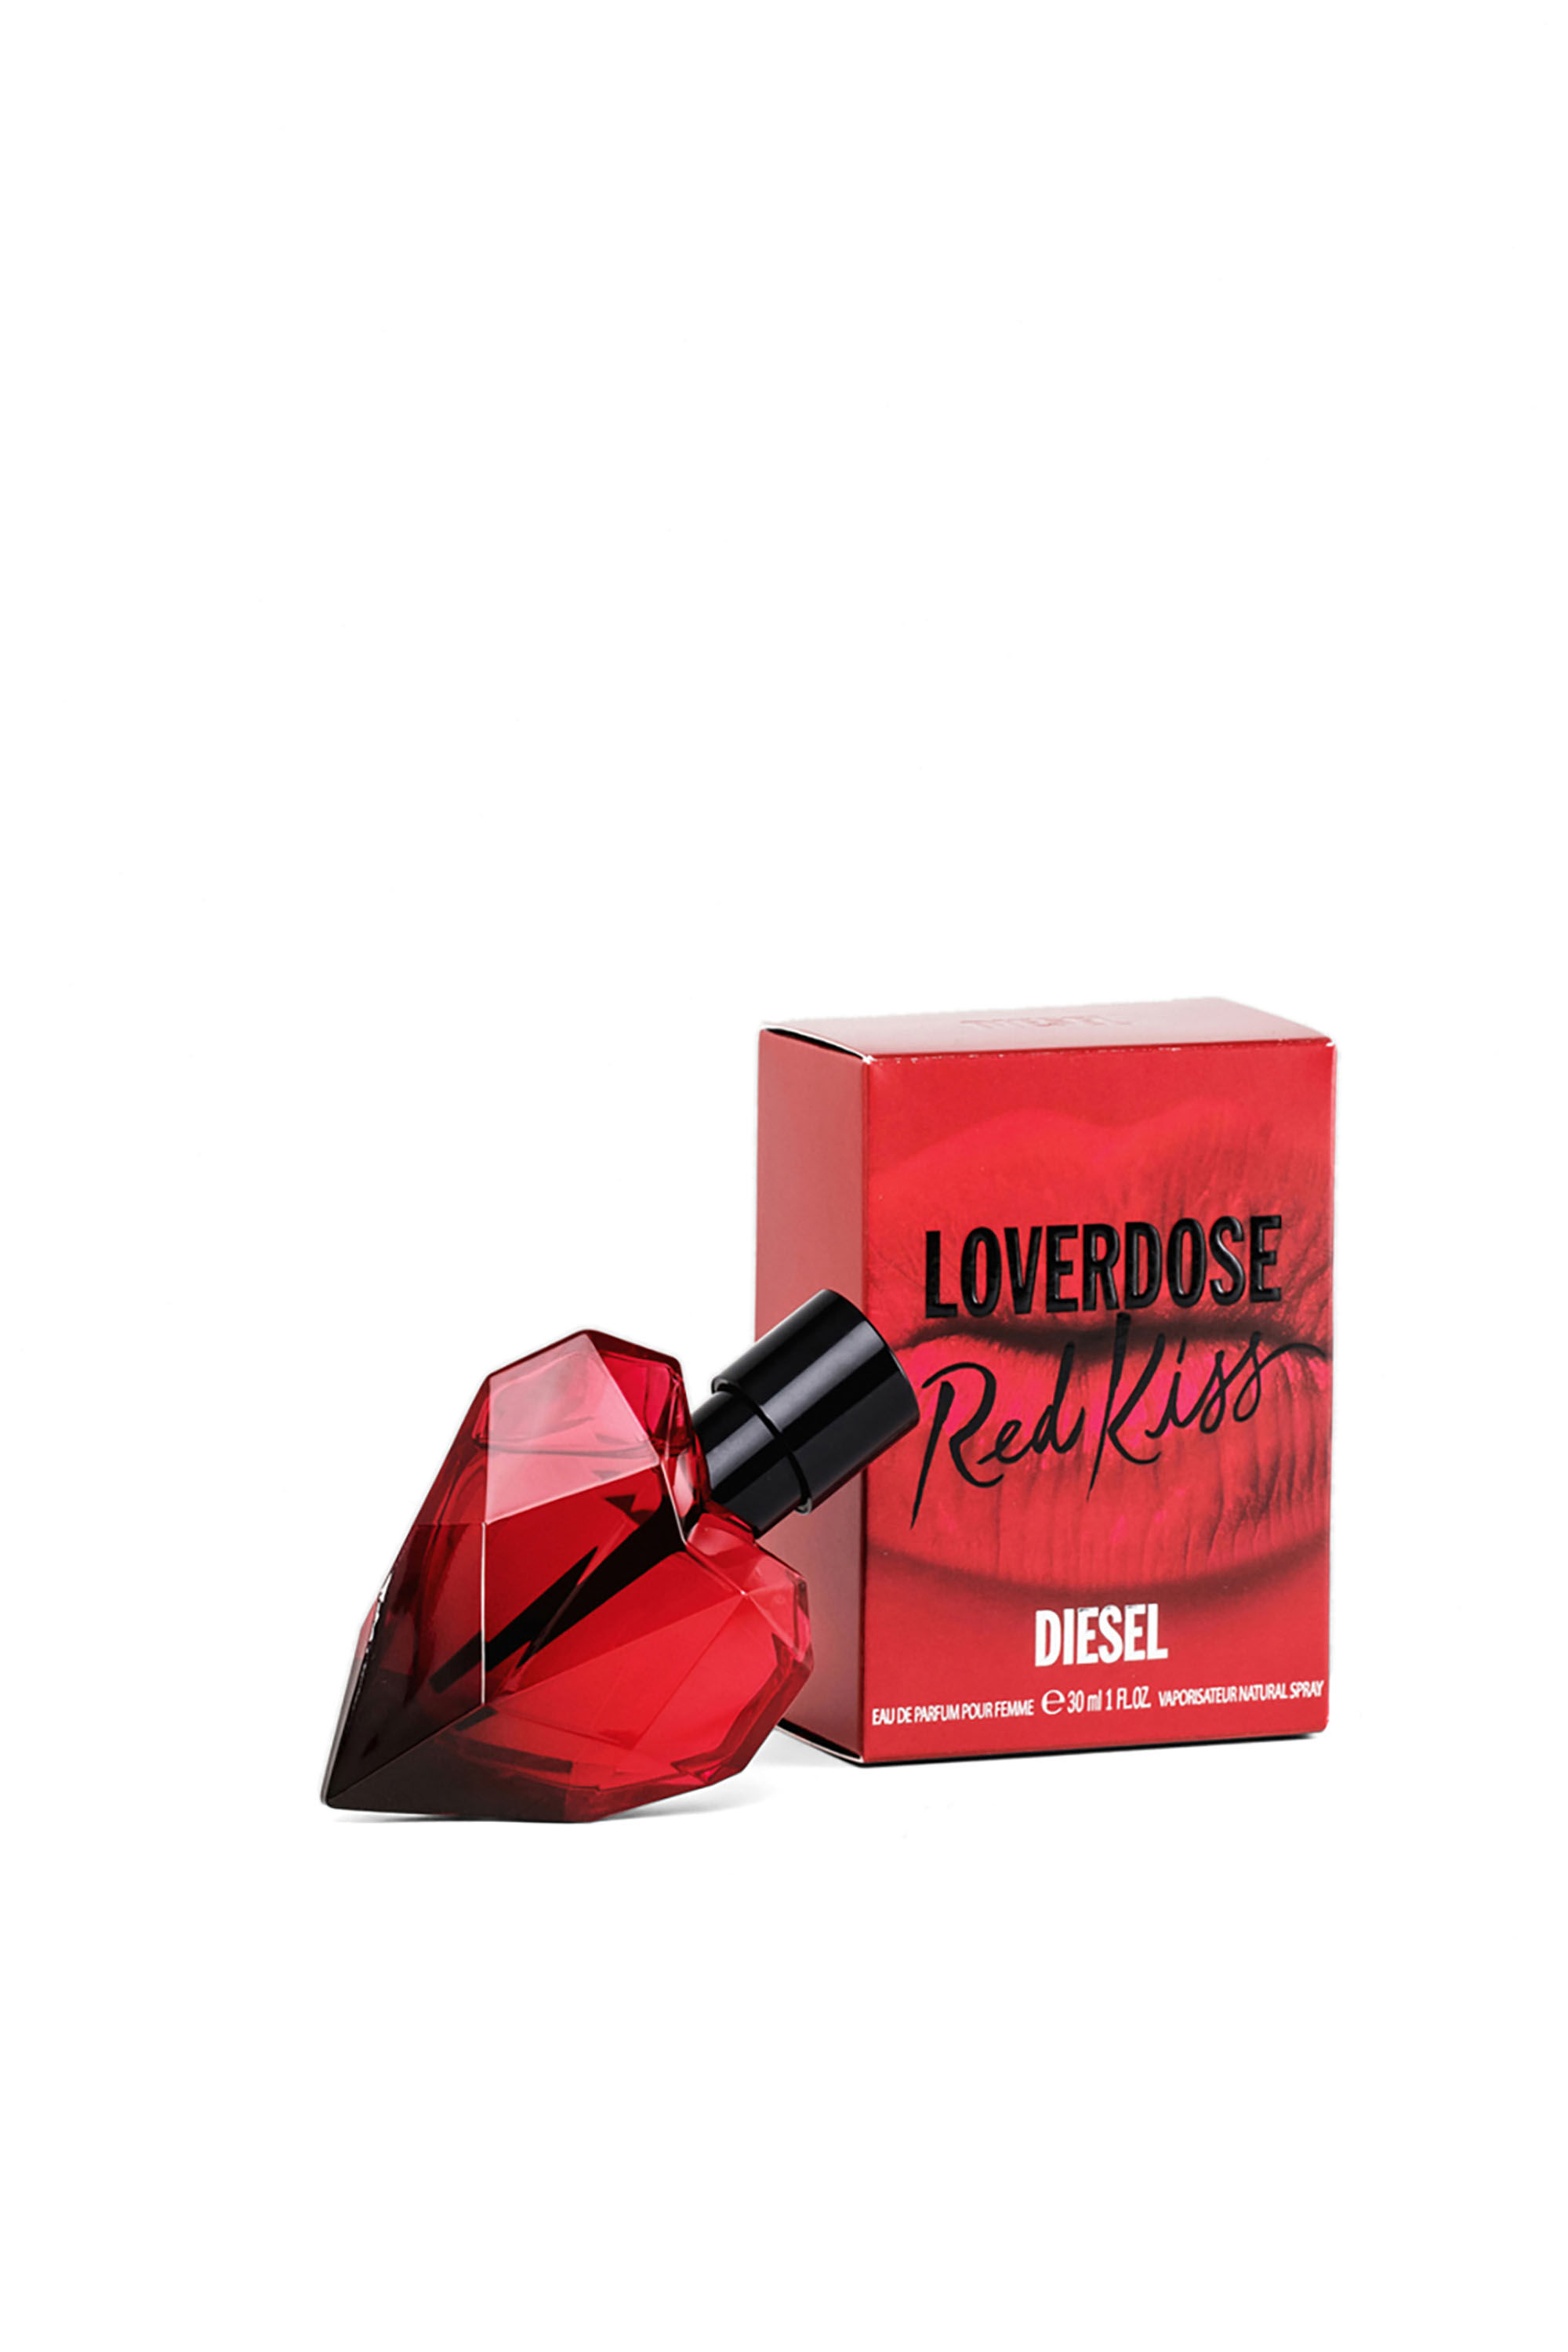 Loverdose red kiss 30ml, eau | Diesel